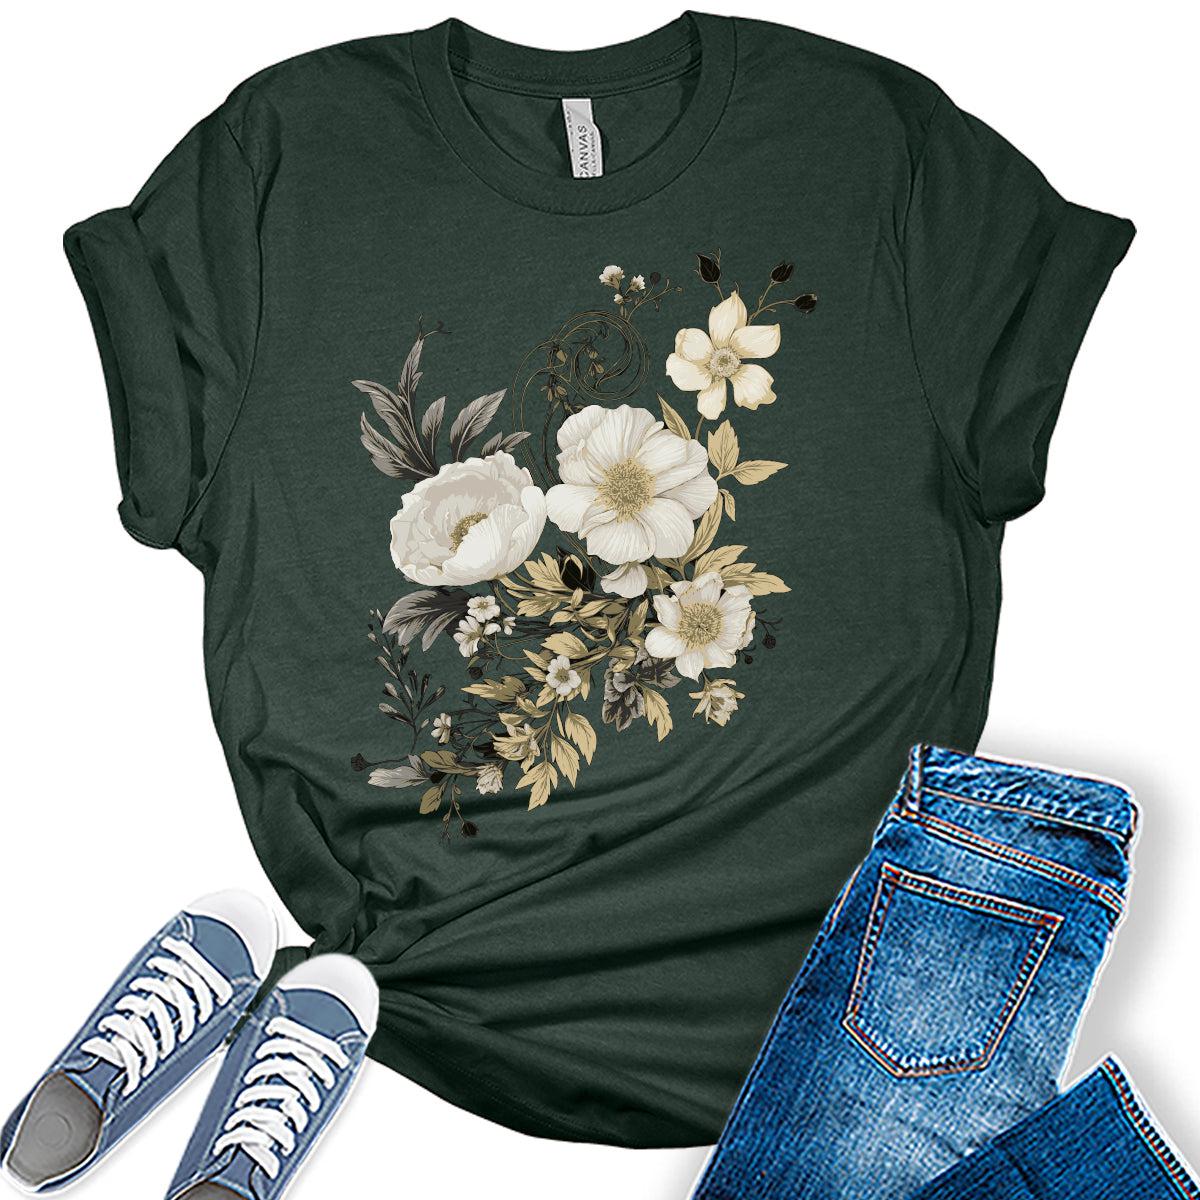 Flower Vines Graphic Shirt